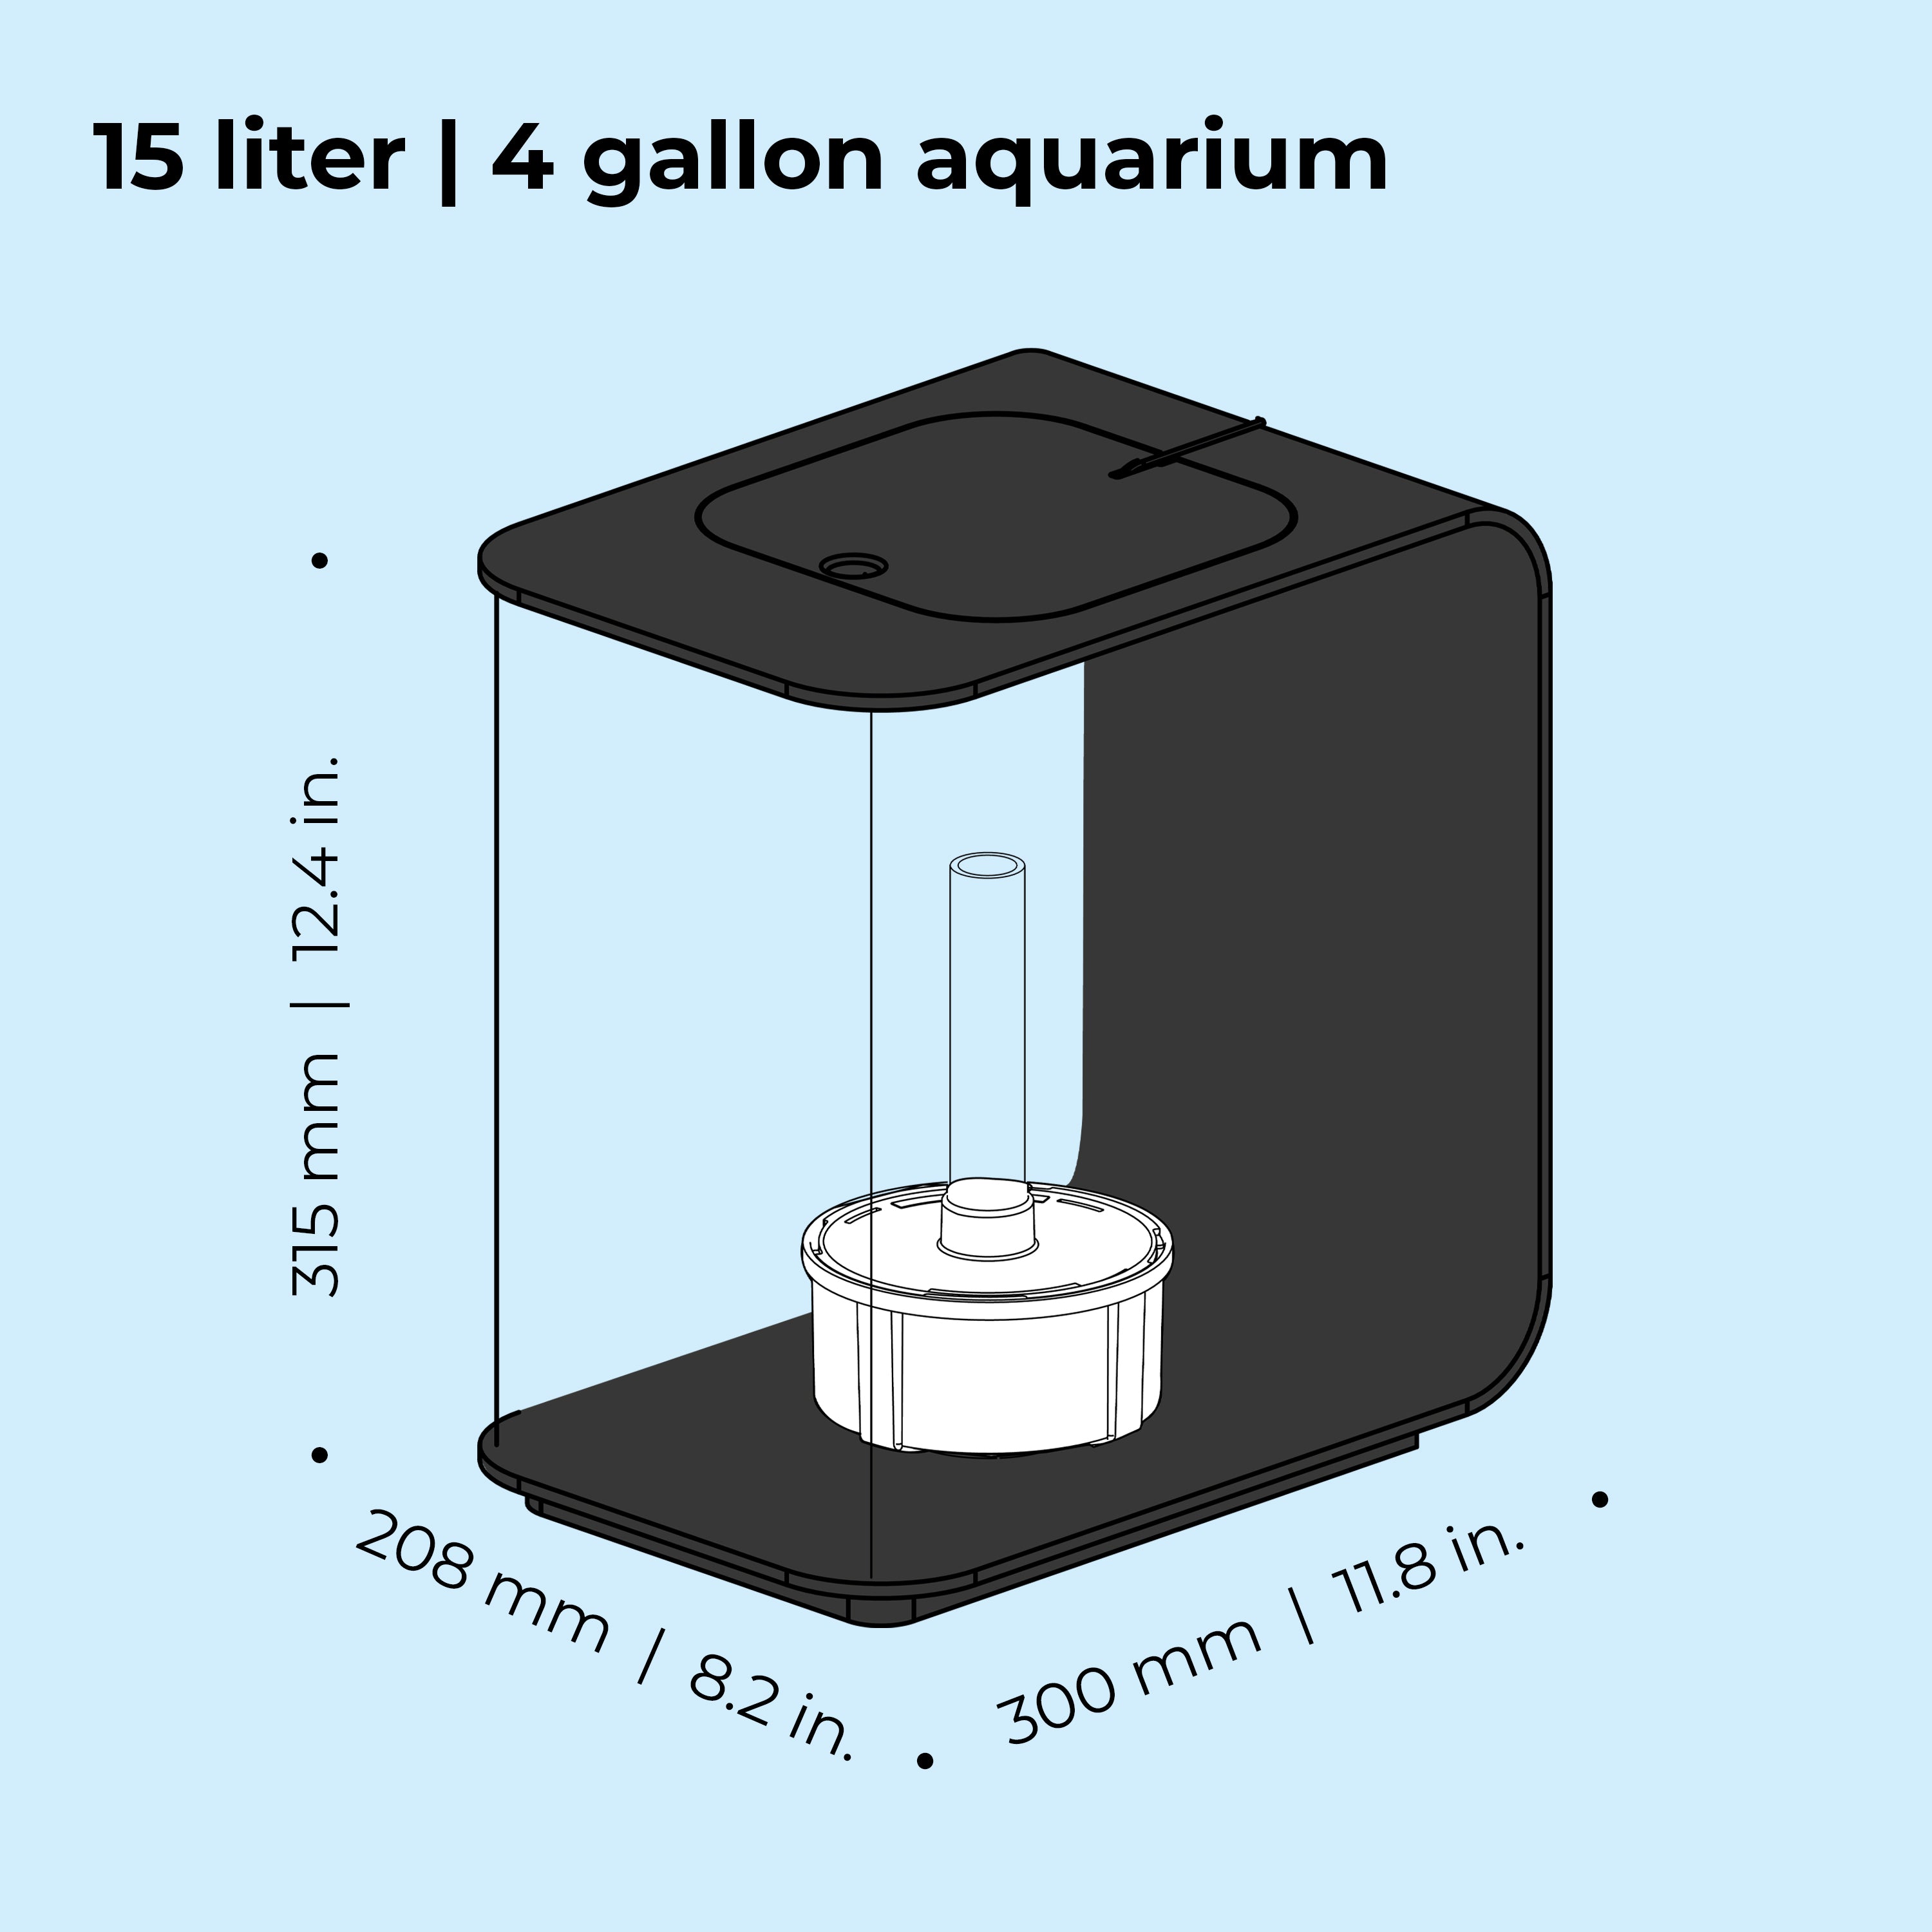 FLOW 15 Aquarium with Standard Light - 4 gallon, 15 liter dimension chart